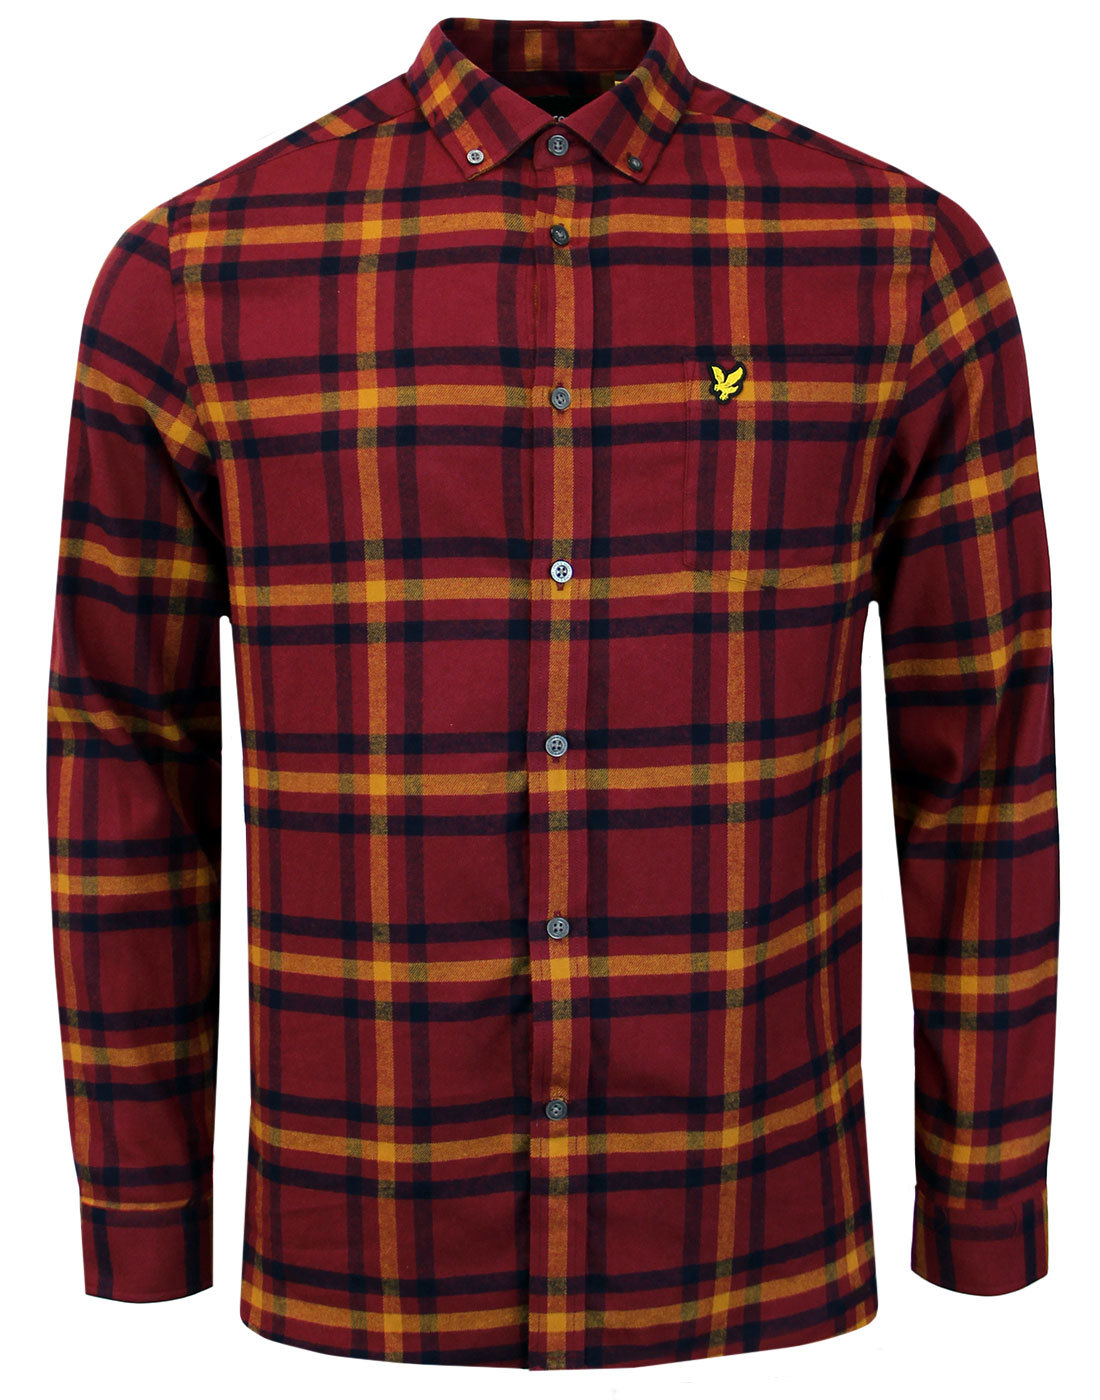 LYLE & SCOTT Retro Mod Plaid Check Flannel Shirt